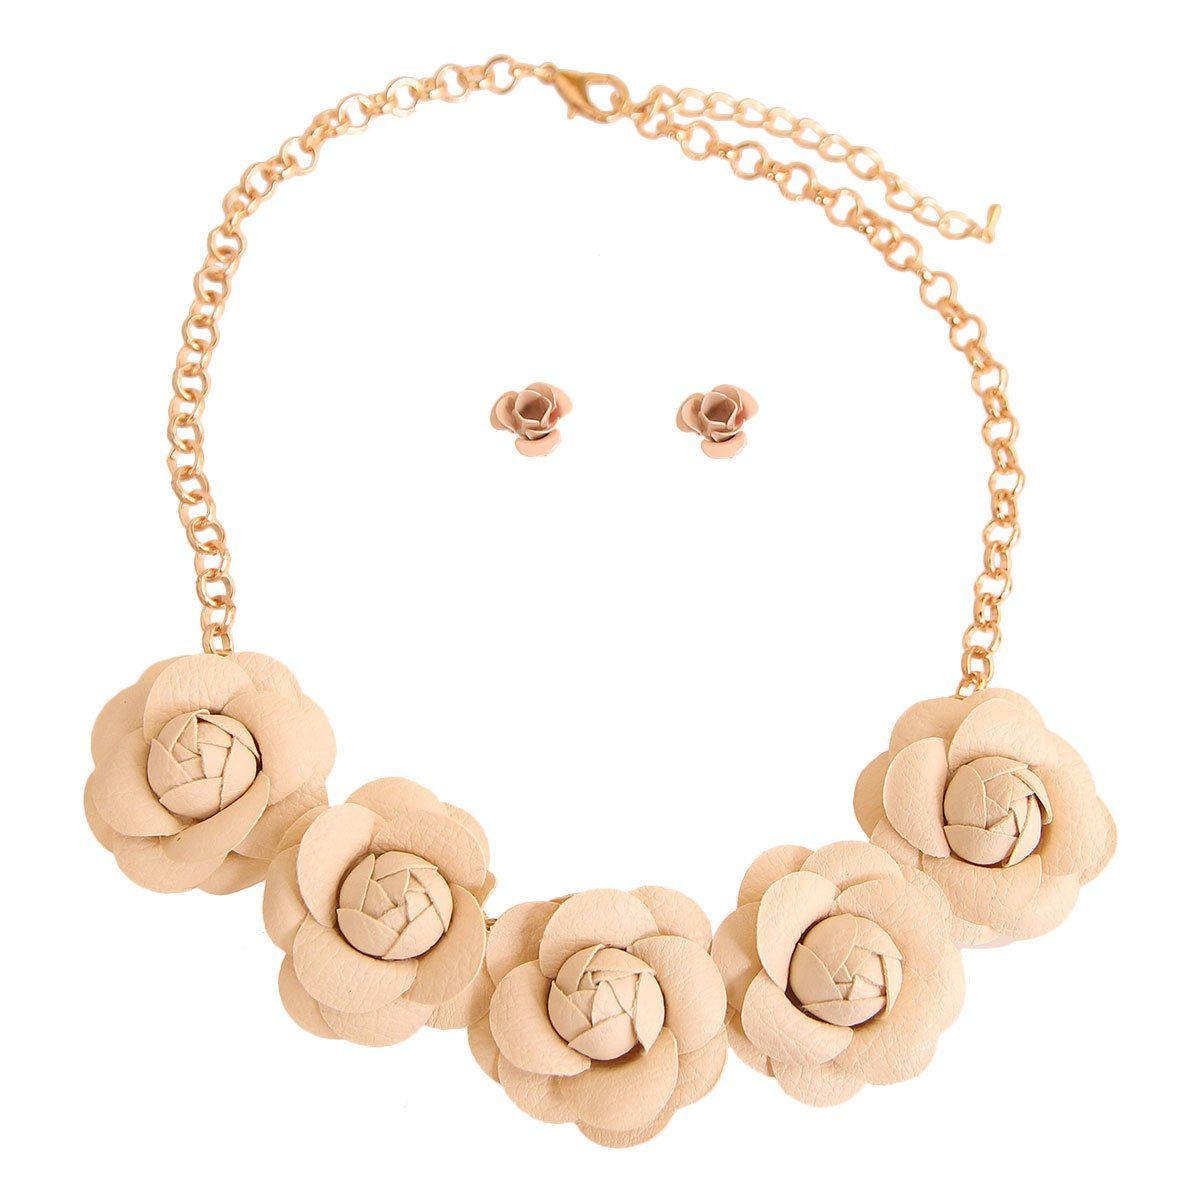 Cream Chanel Inspired Camellia Necklace